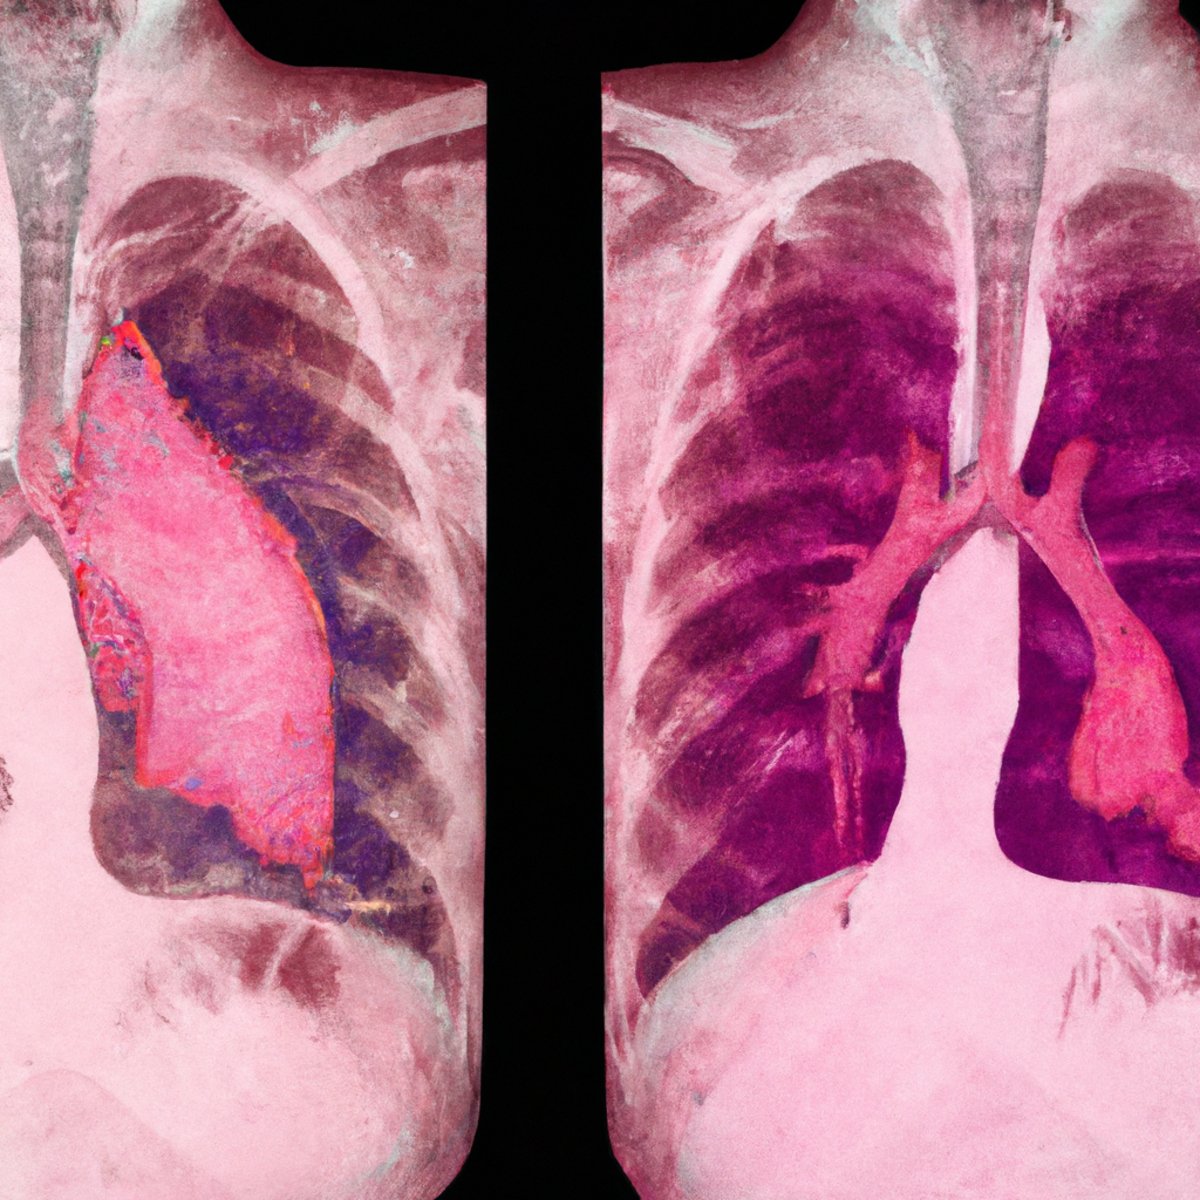 Close-up of a lung with Desquamative Interstitial Pneumonia (DIP)